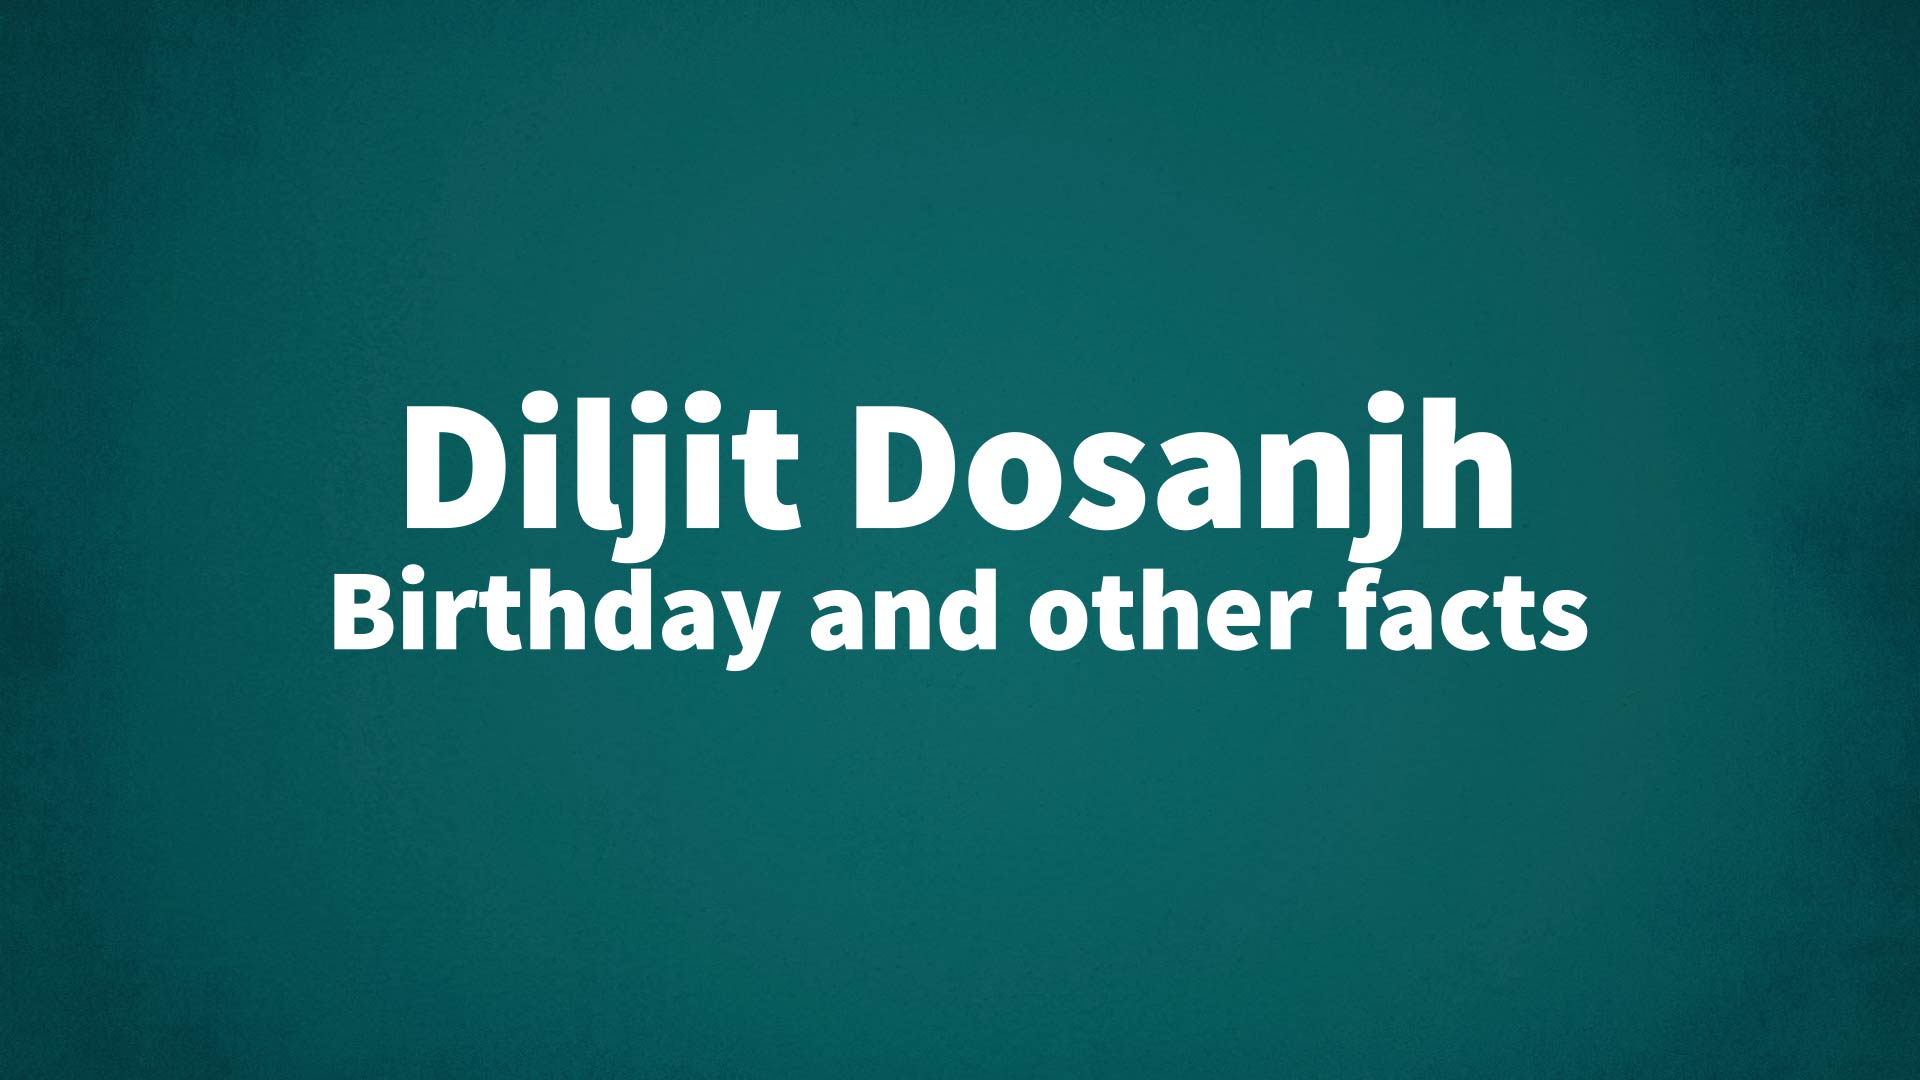 title image for Diljit Dosanjh birthday